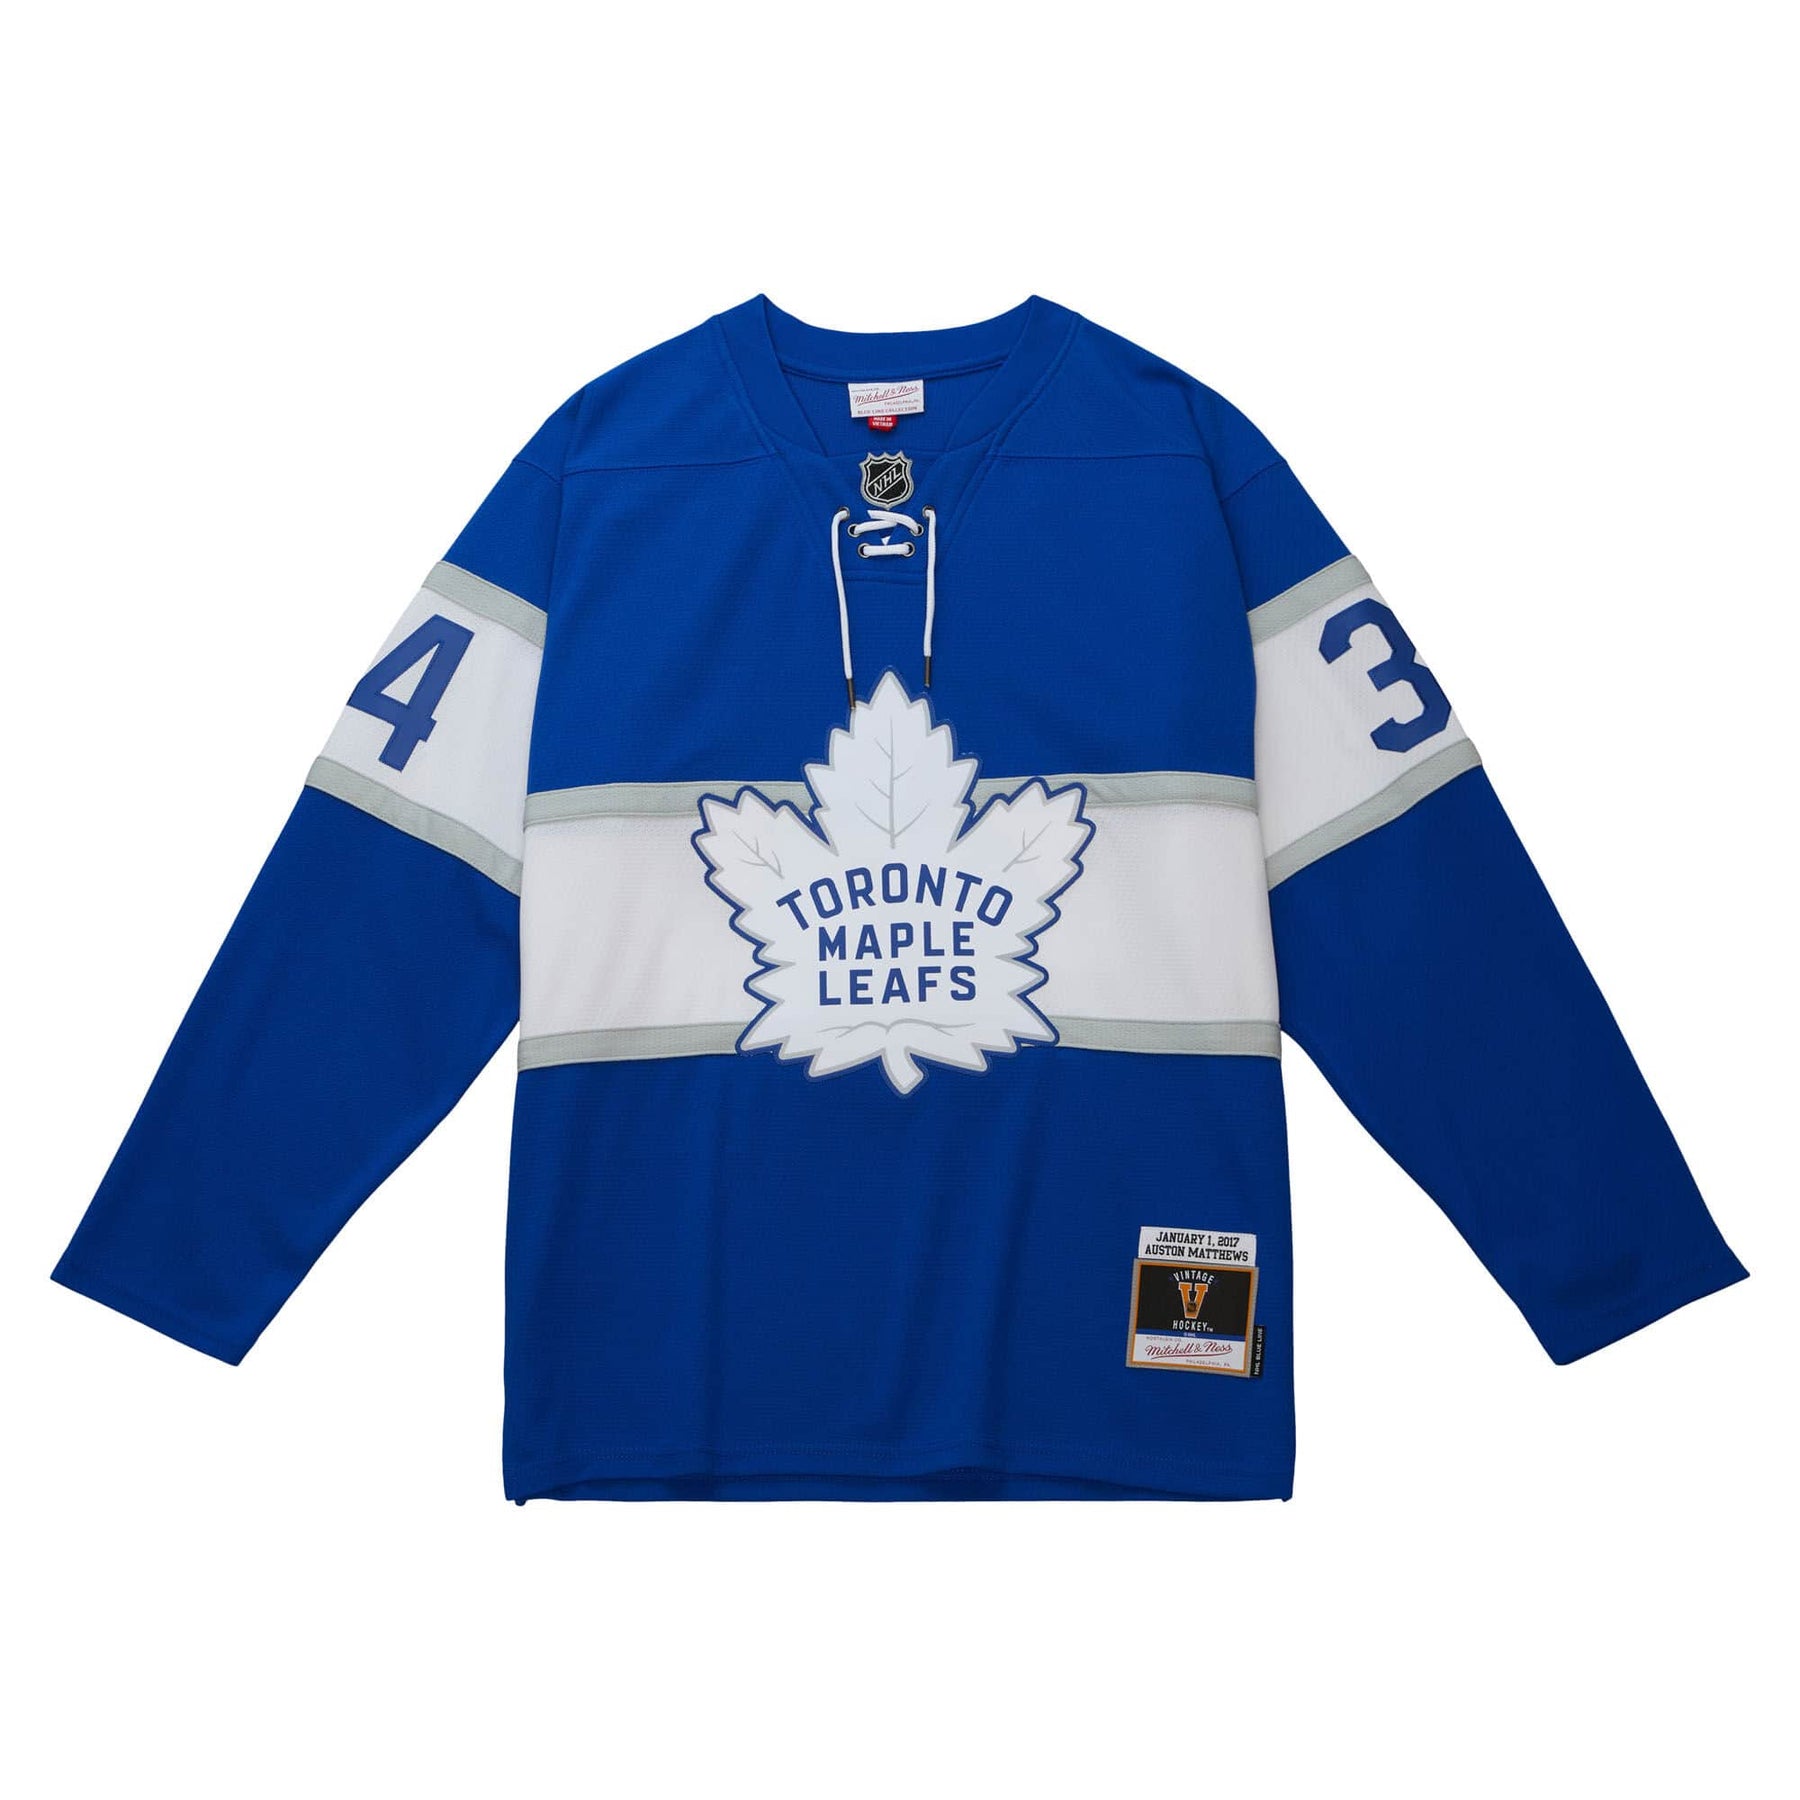 Auston Matthews Toronto Maple Leafs Fanatics Blue Jersey